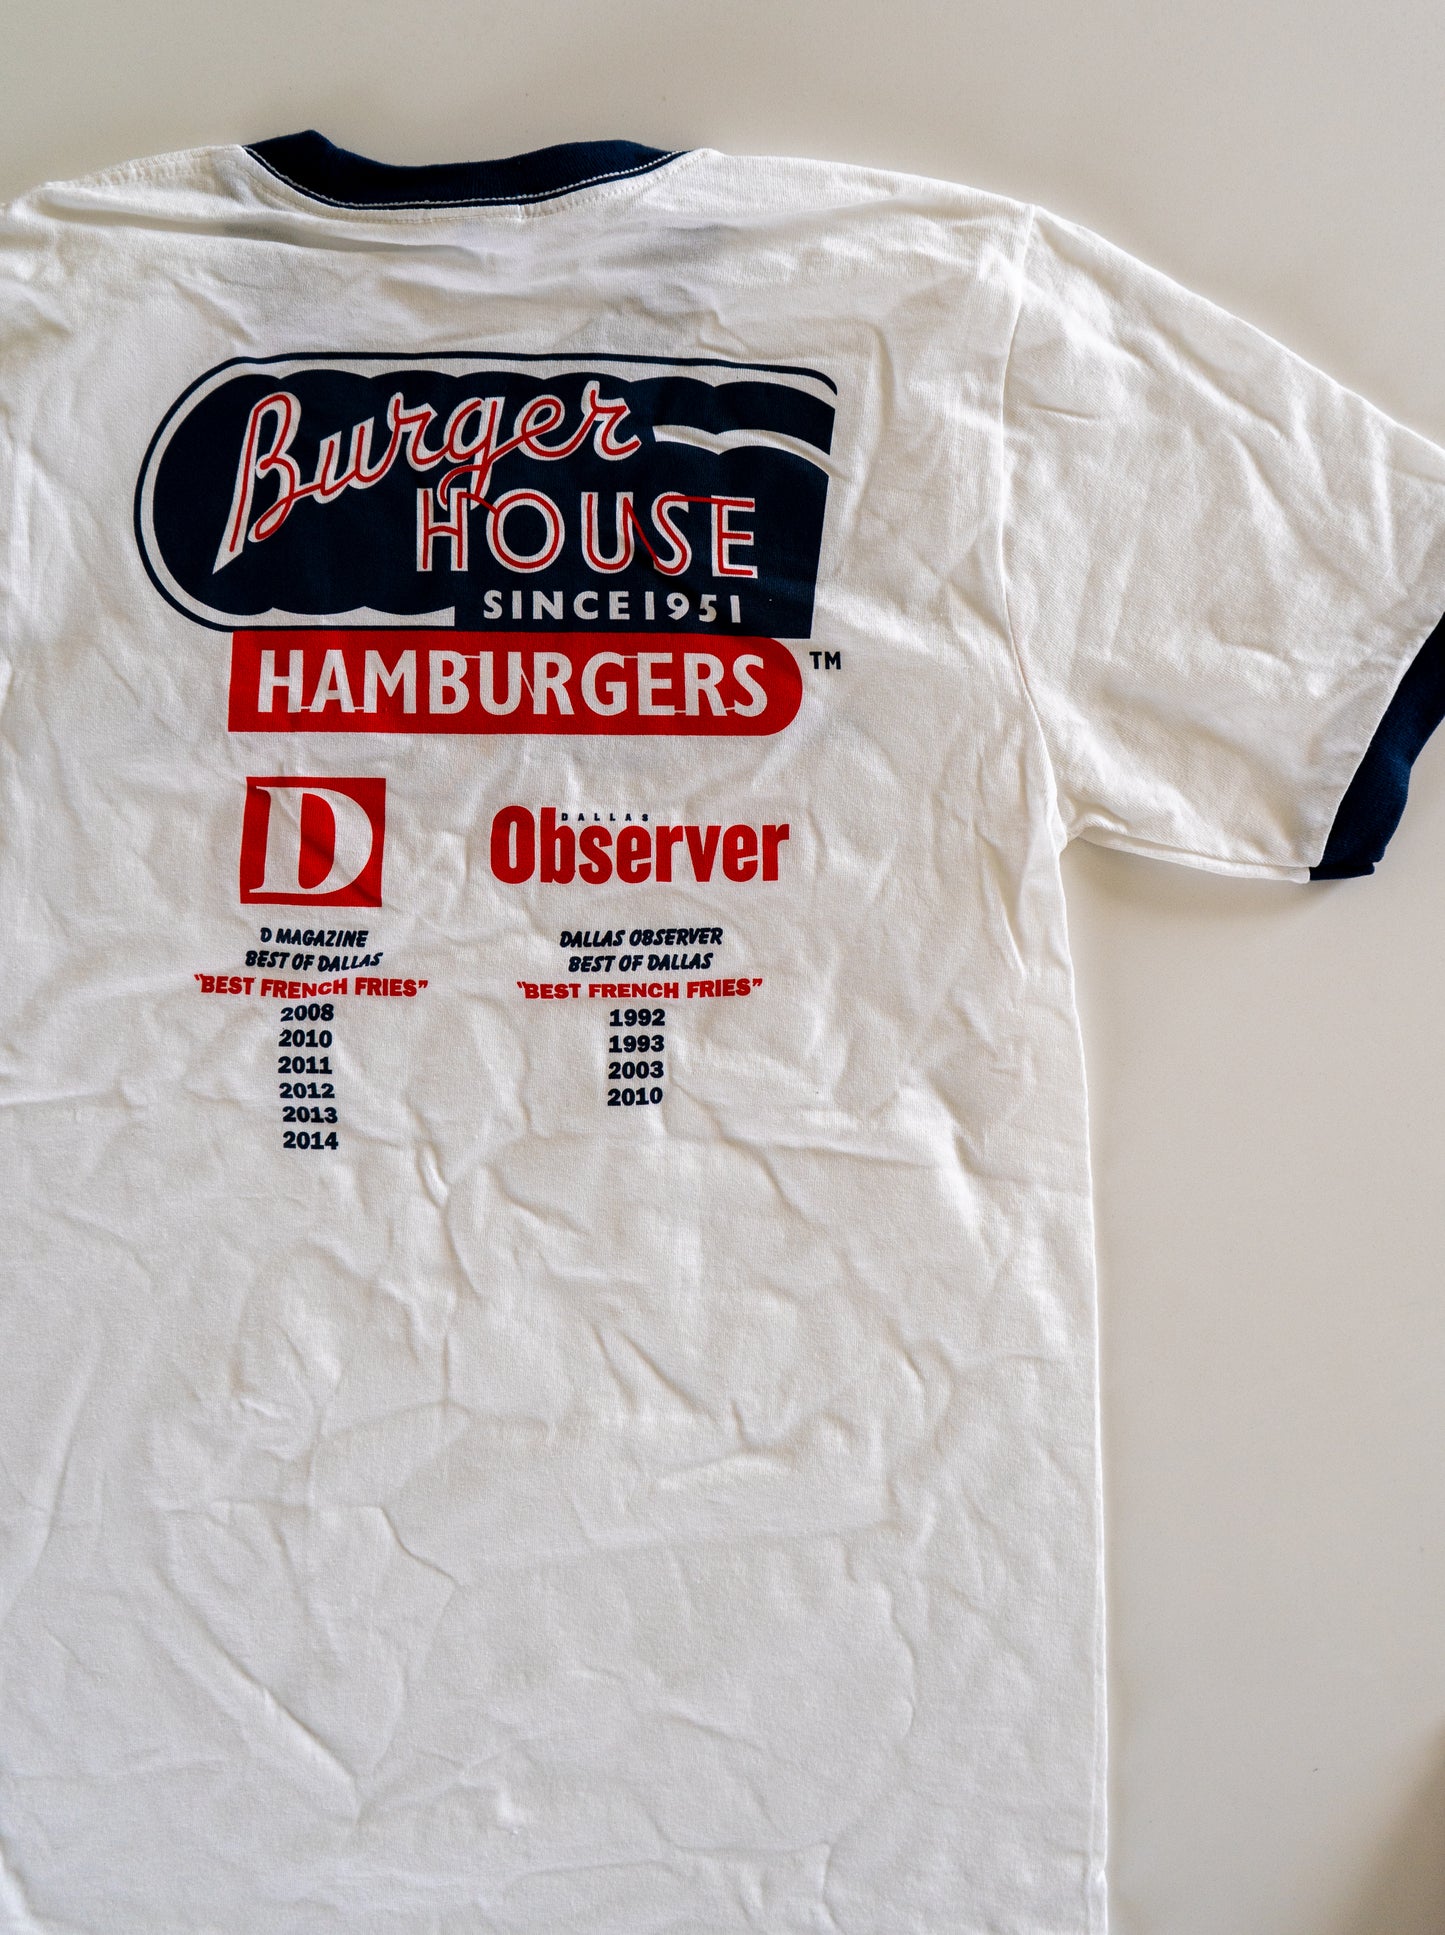 Burger House T-Shirts